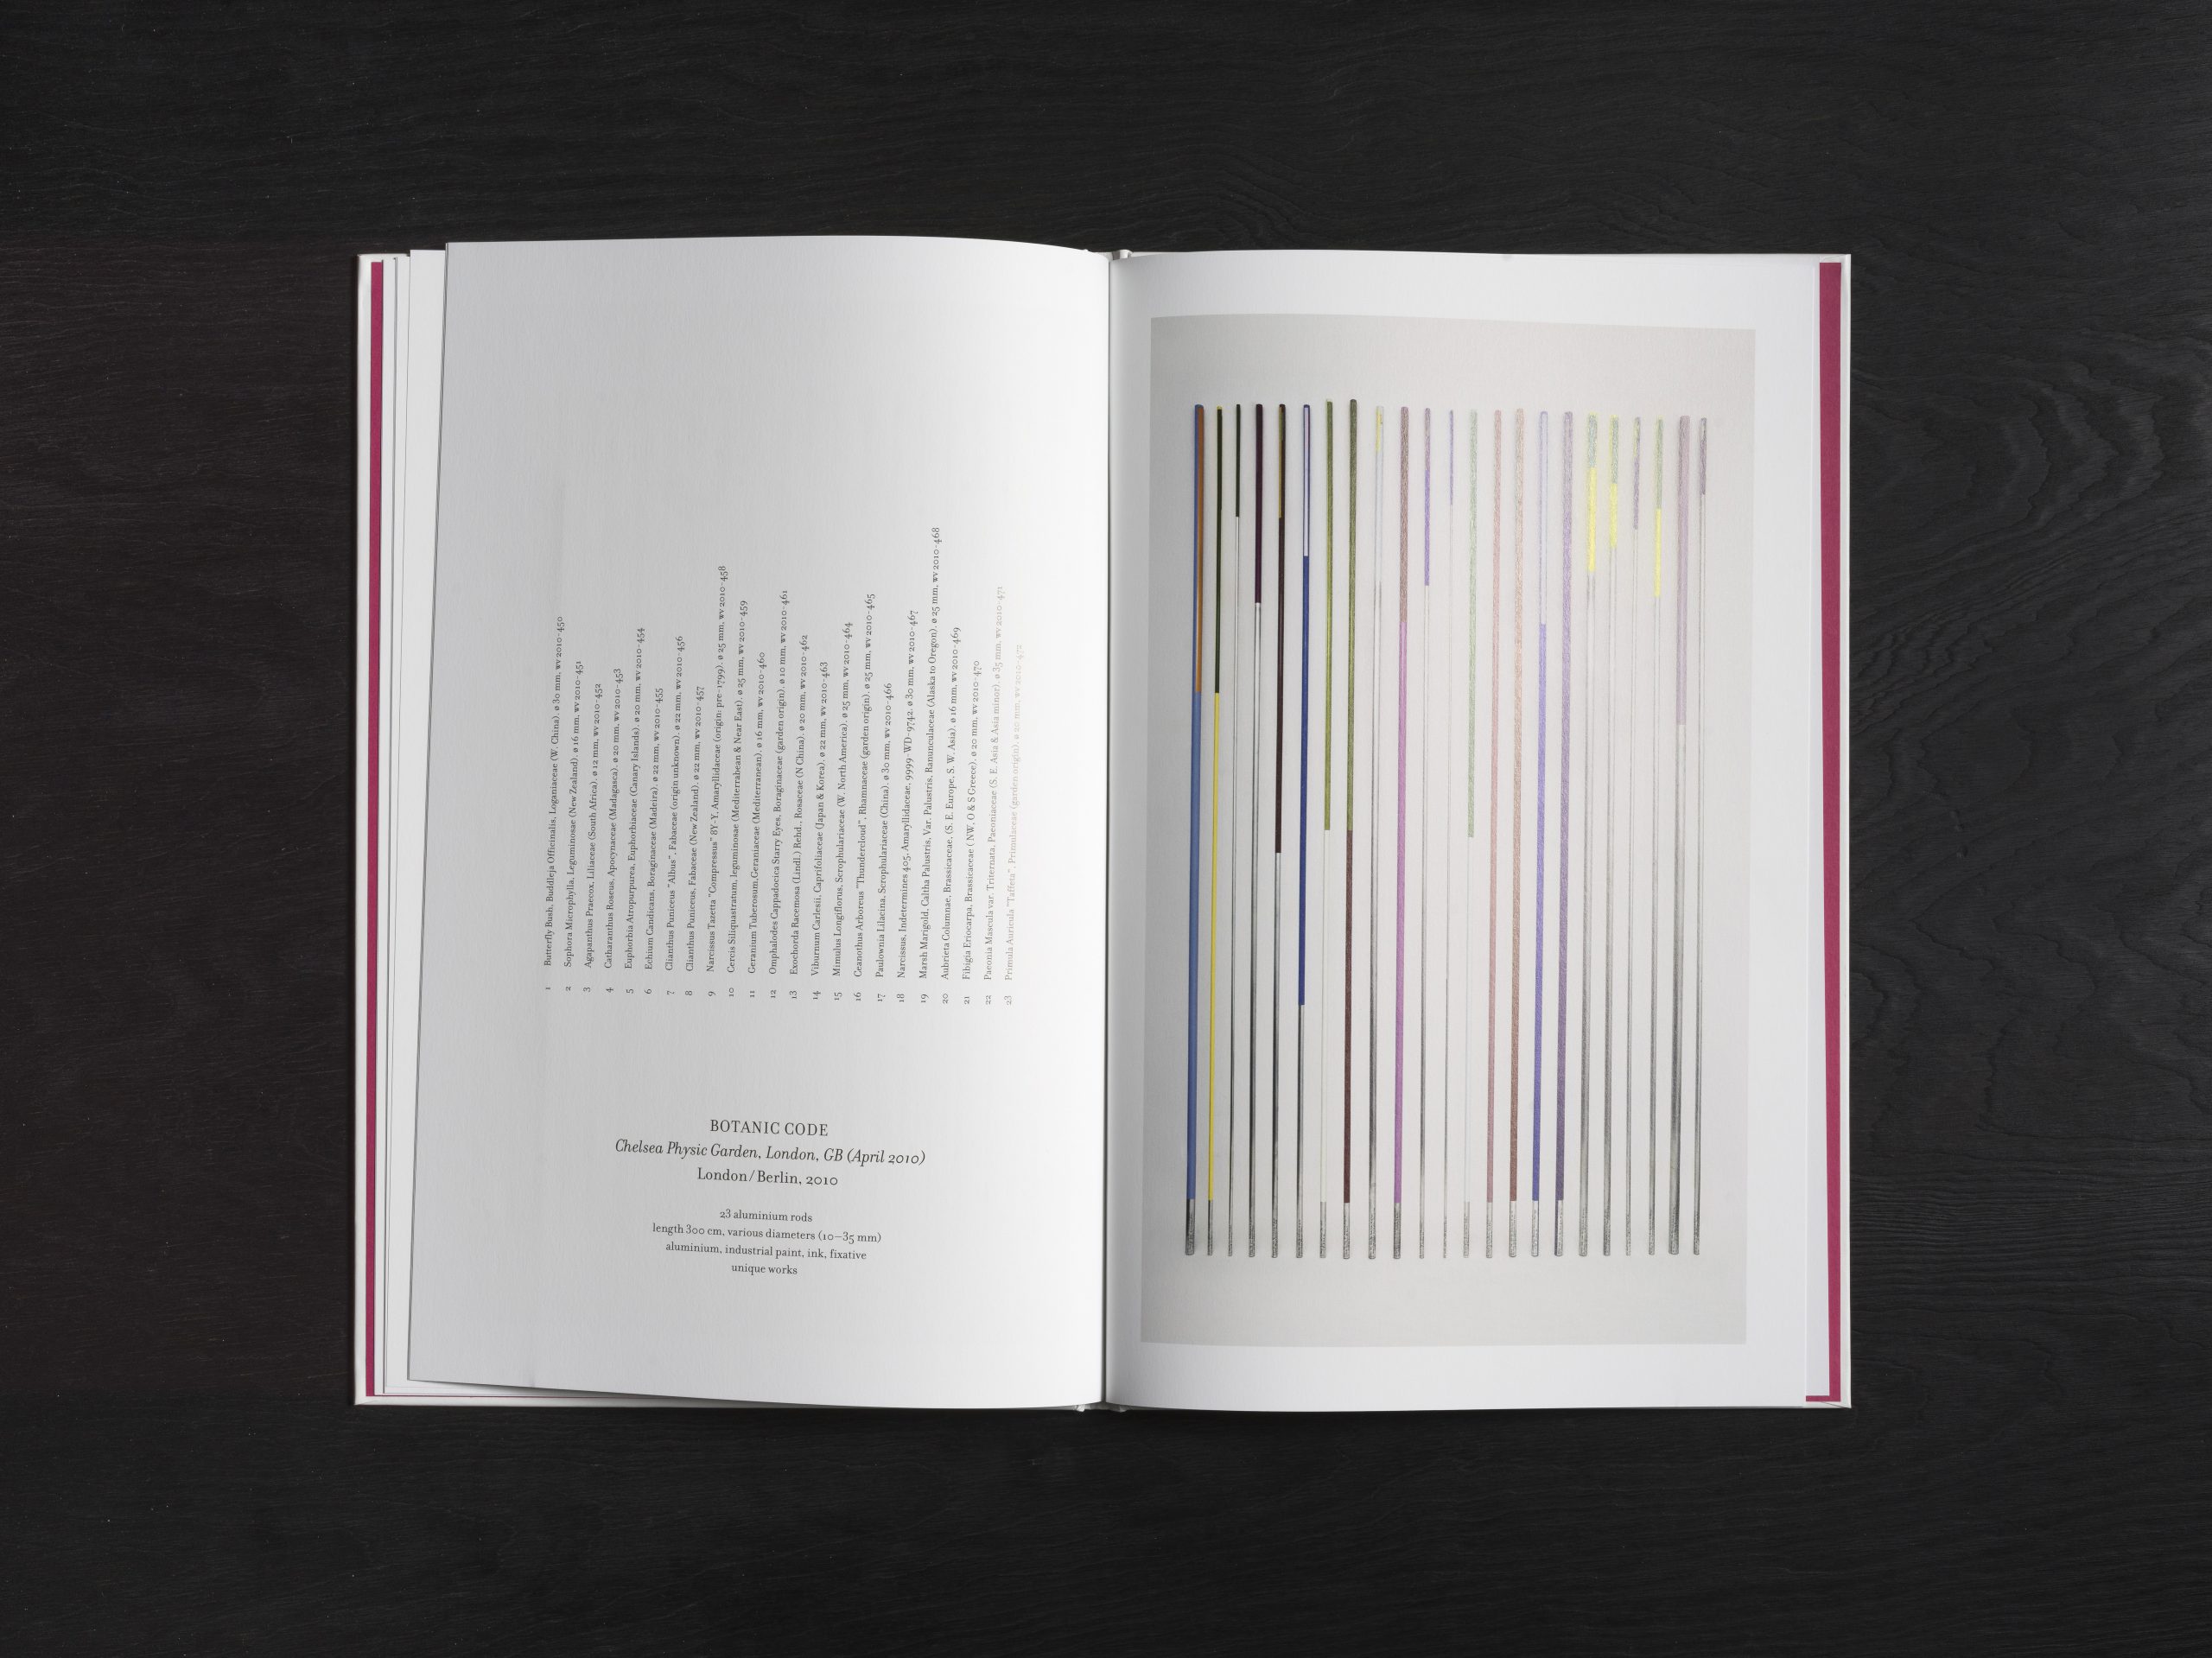 Jorinde Voigt – Botanic Code, Kienbaum Artists’ Books 2011 Edition, Editor: Jochen Kienbaum, Text: Jorinde Voigt, Language: German, total pages: 50, Publishing: Snoeck Verlagsgesellschaft, Köln ISBN: 978-3-940953-61-2, Price: €29,90.